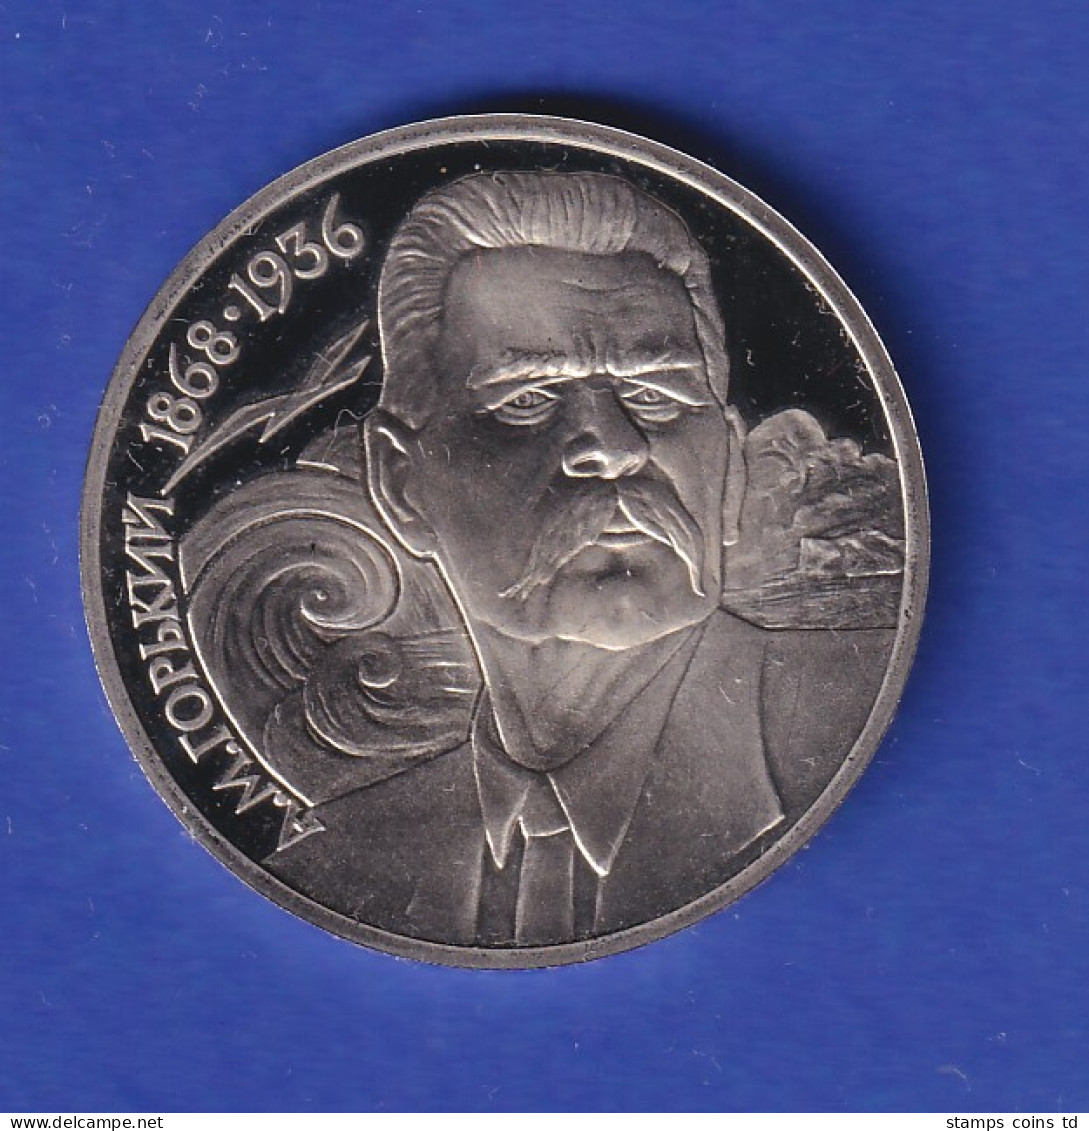 Russland Sowjetunion 1 Rubel Maxim Gorki 1988 - Rusland